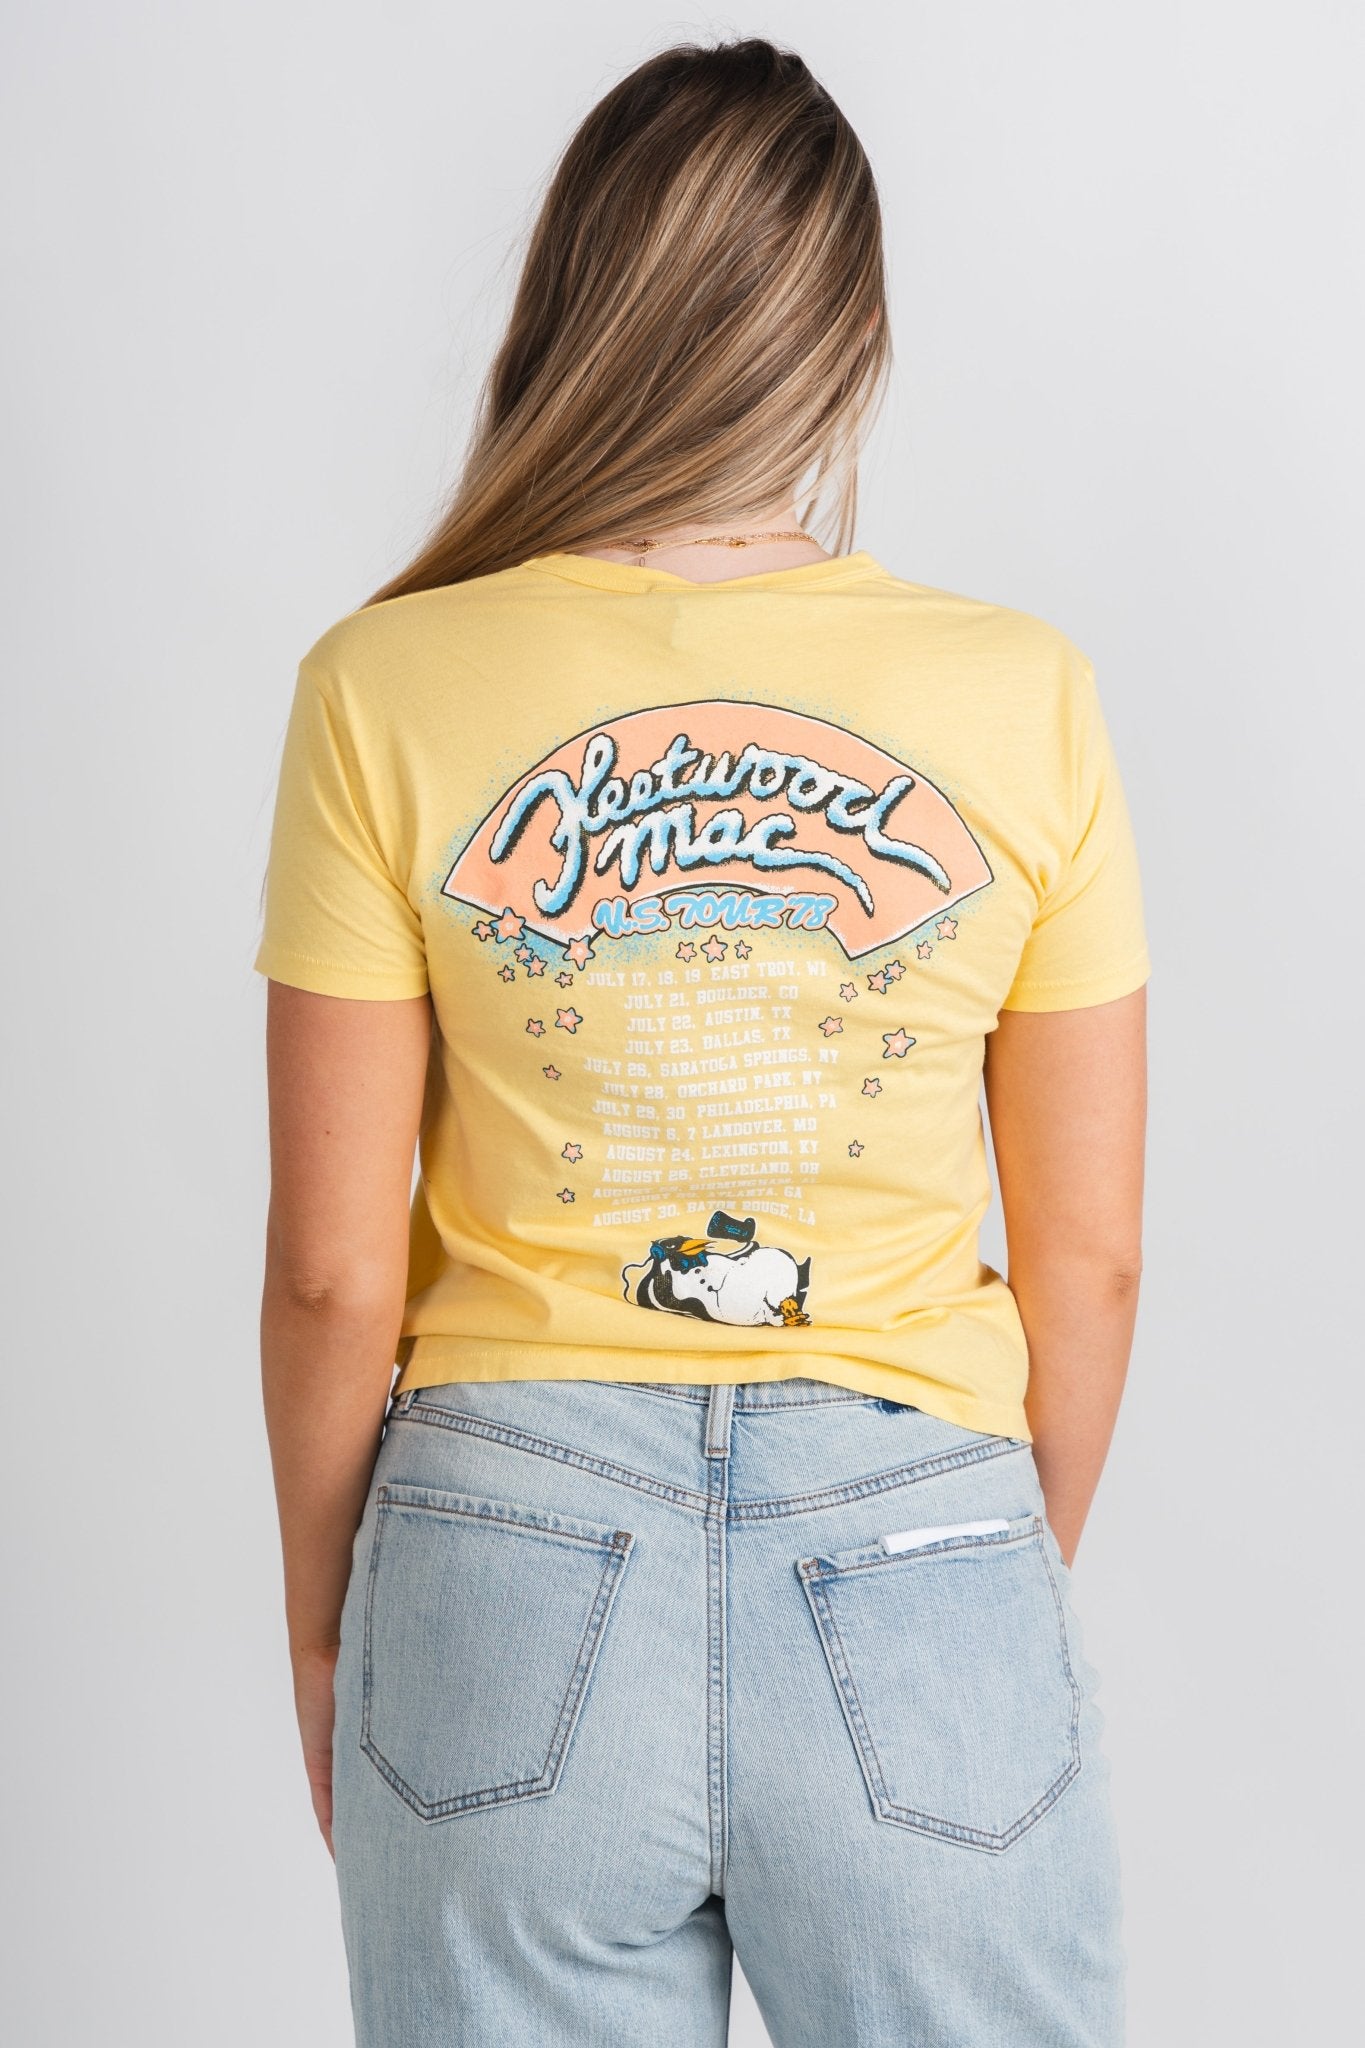 DayDreamer Fleetwood Mac tour 78 ringer t-shirt yellow bloom